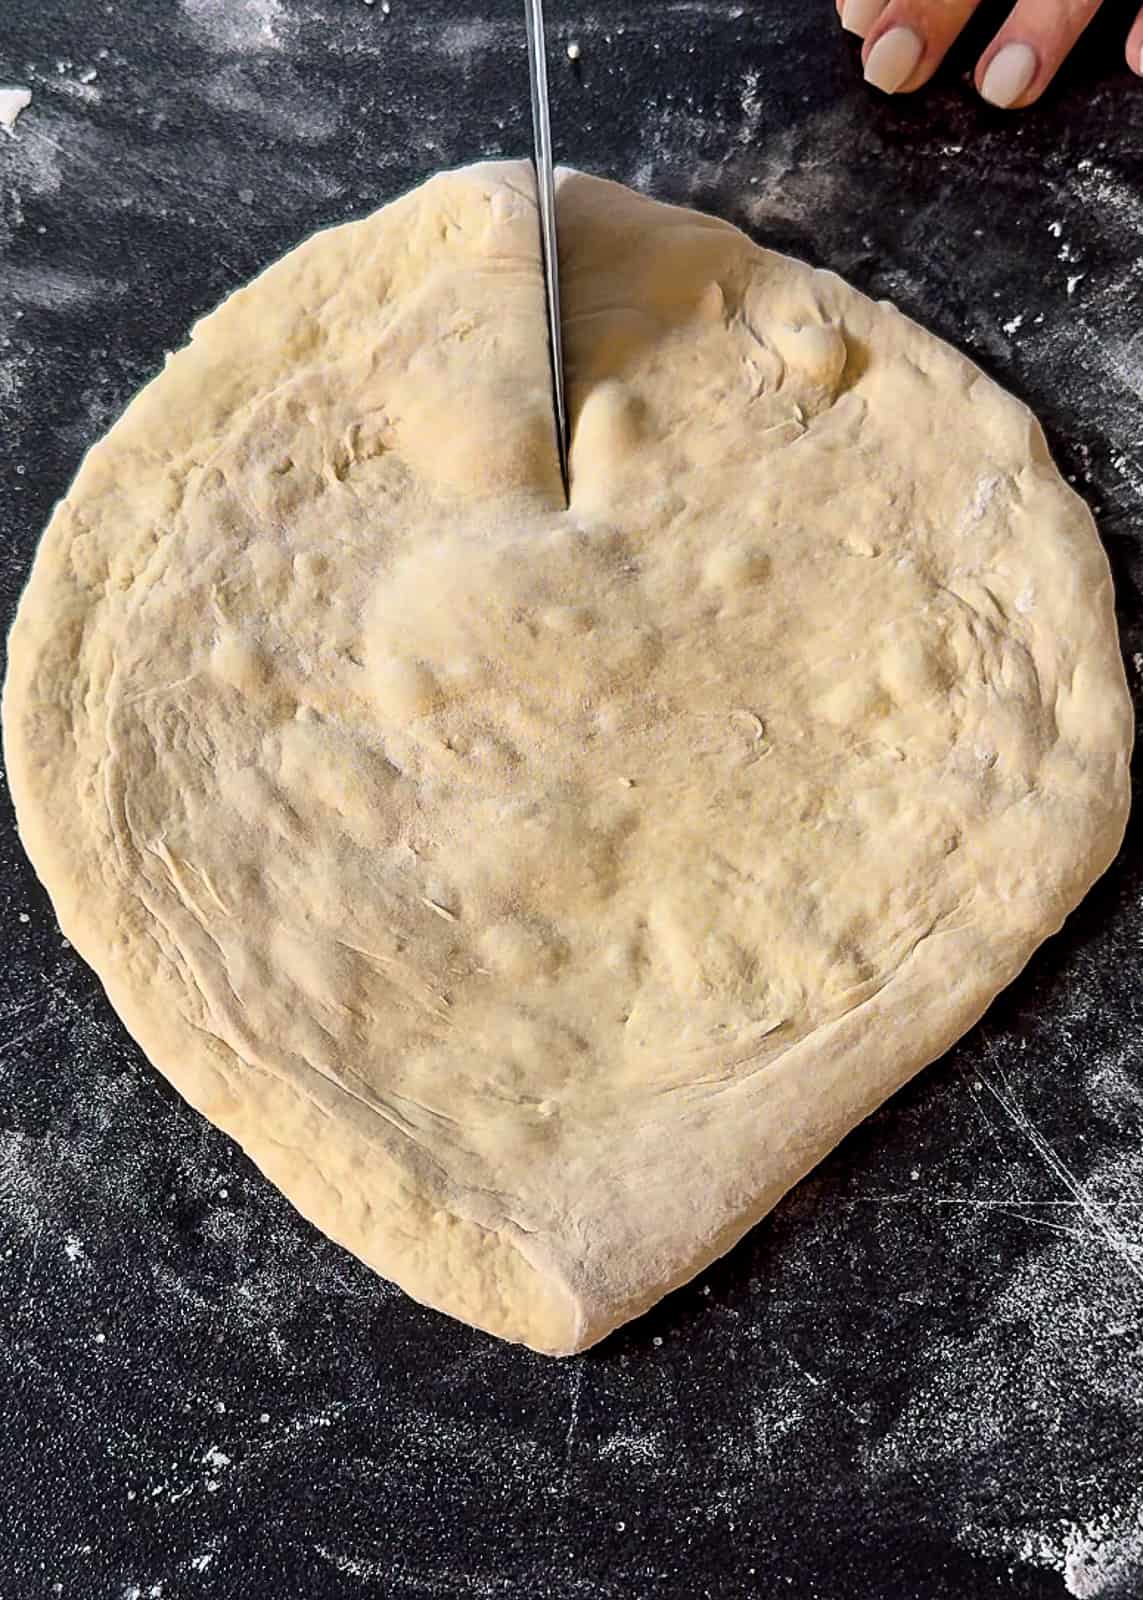 Cutting a heart shape into pizza dough